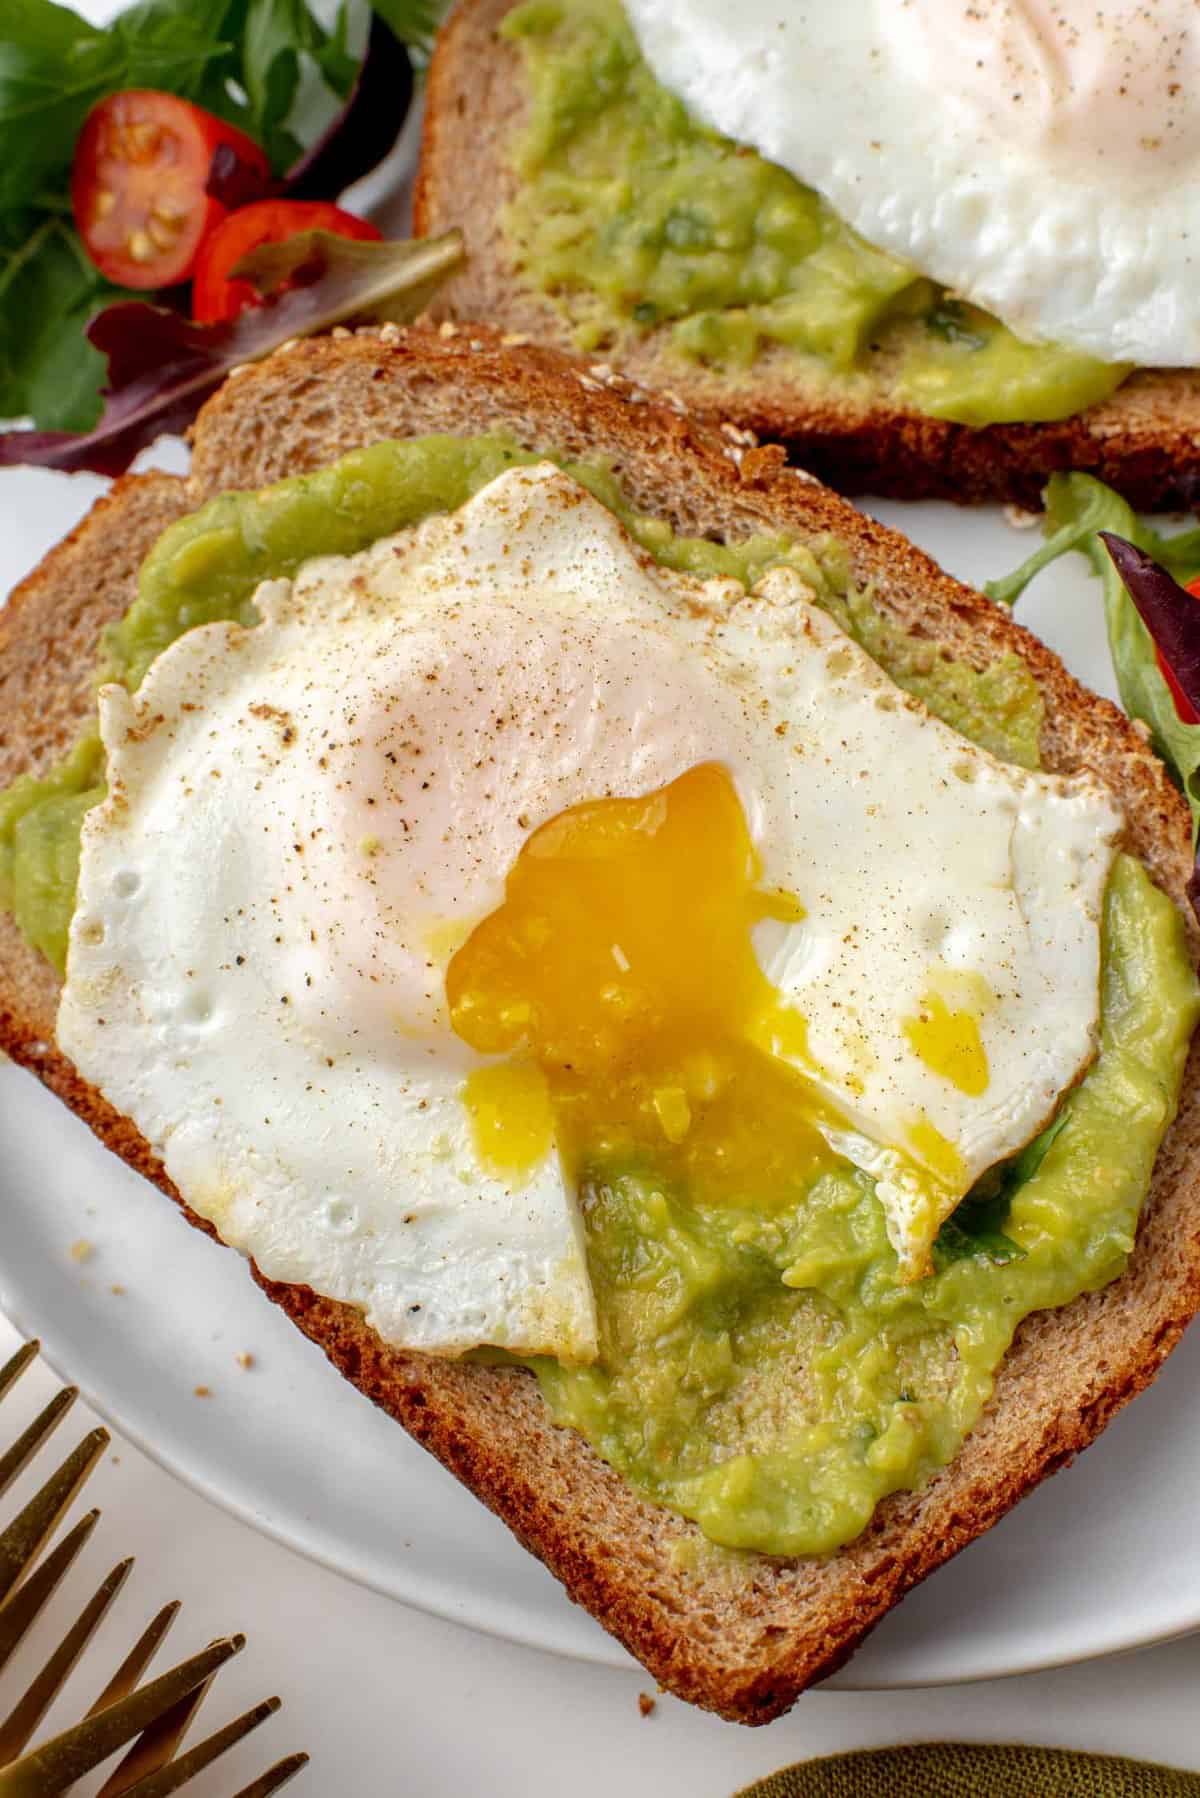 Egg with broken egg yolk on avocado toast.